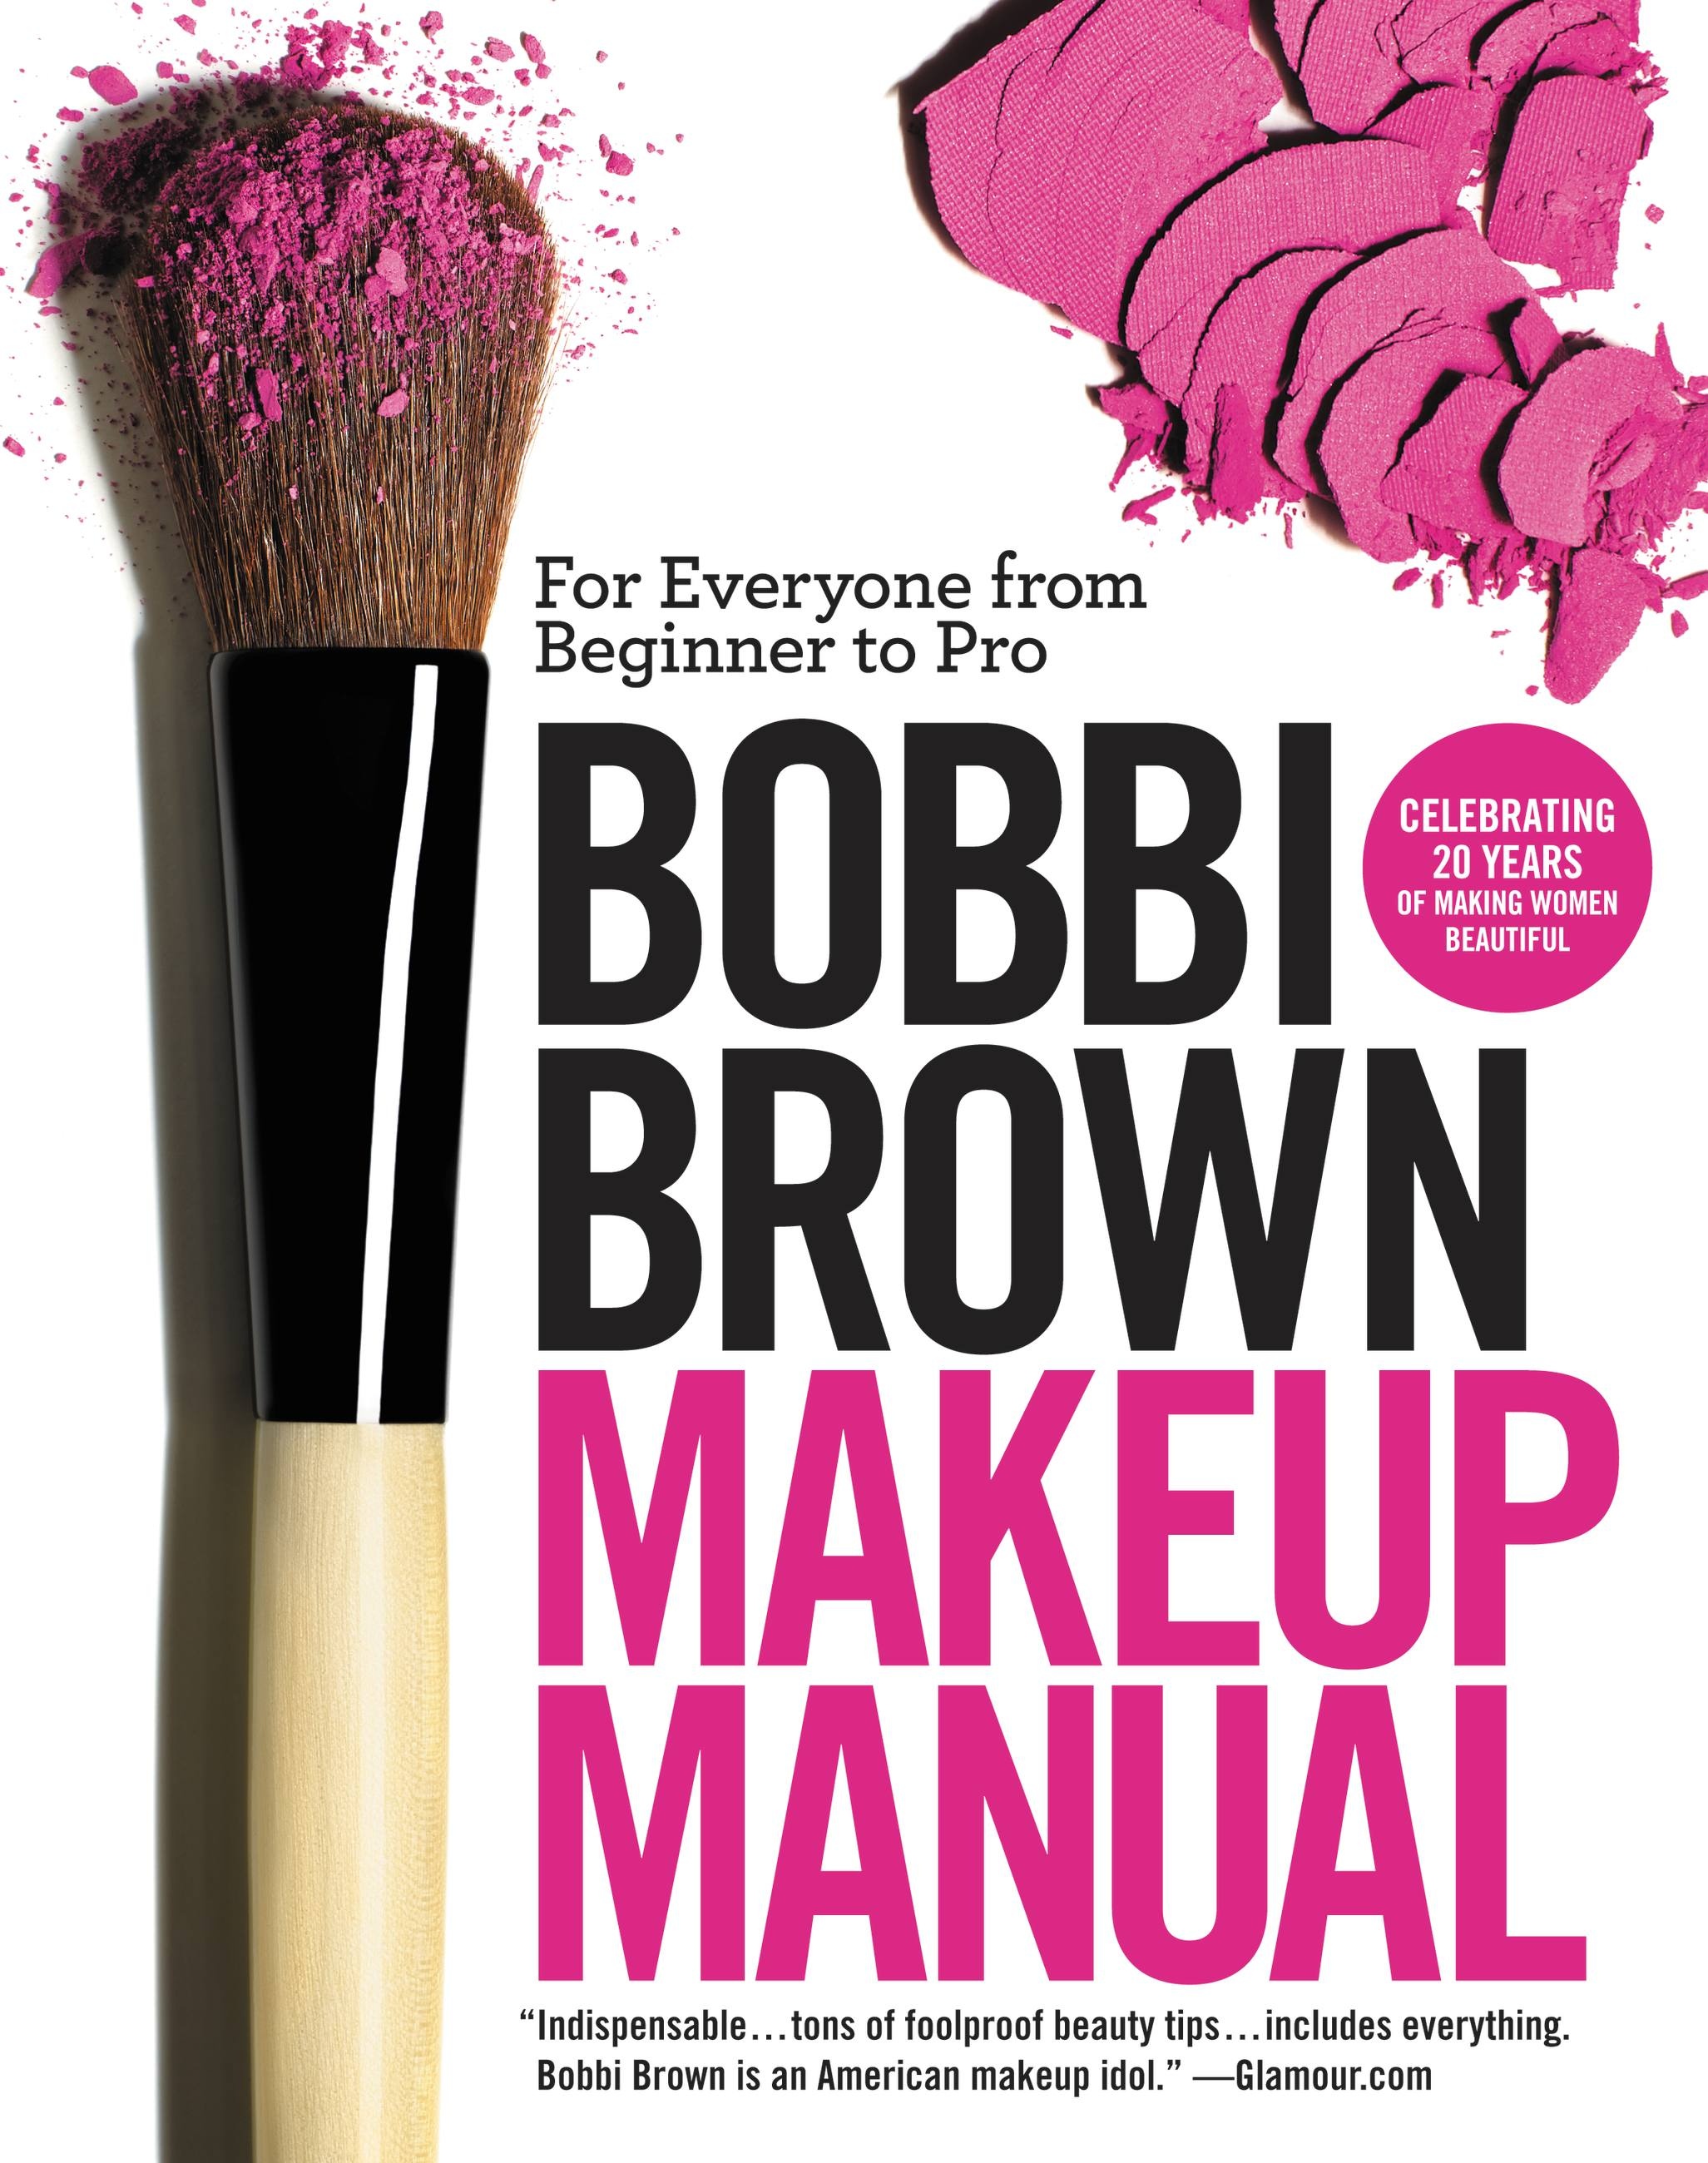 Bobbi Brown Makeup Manual – Hachette Book Group